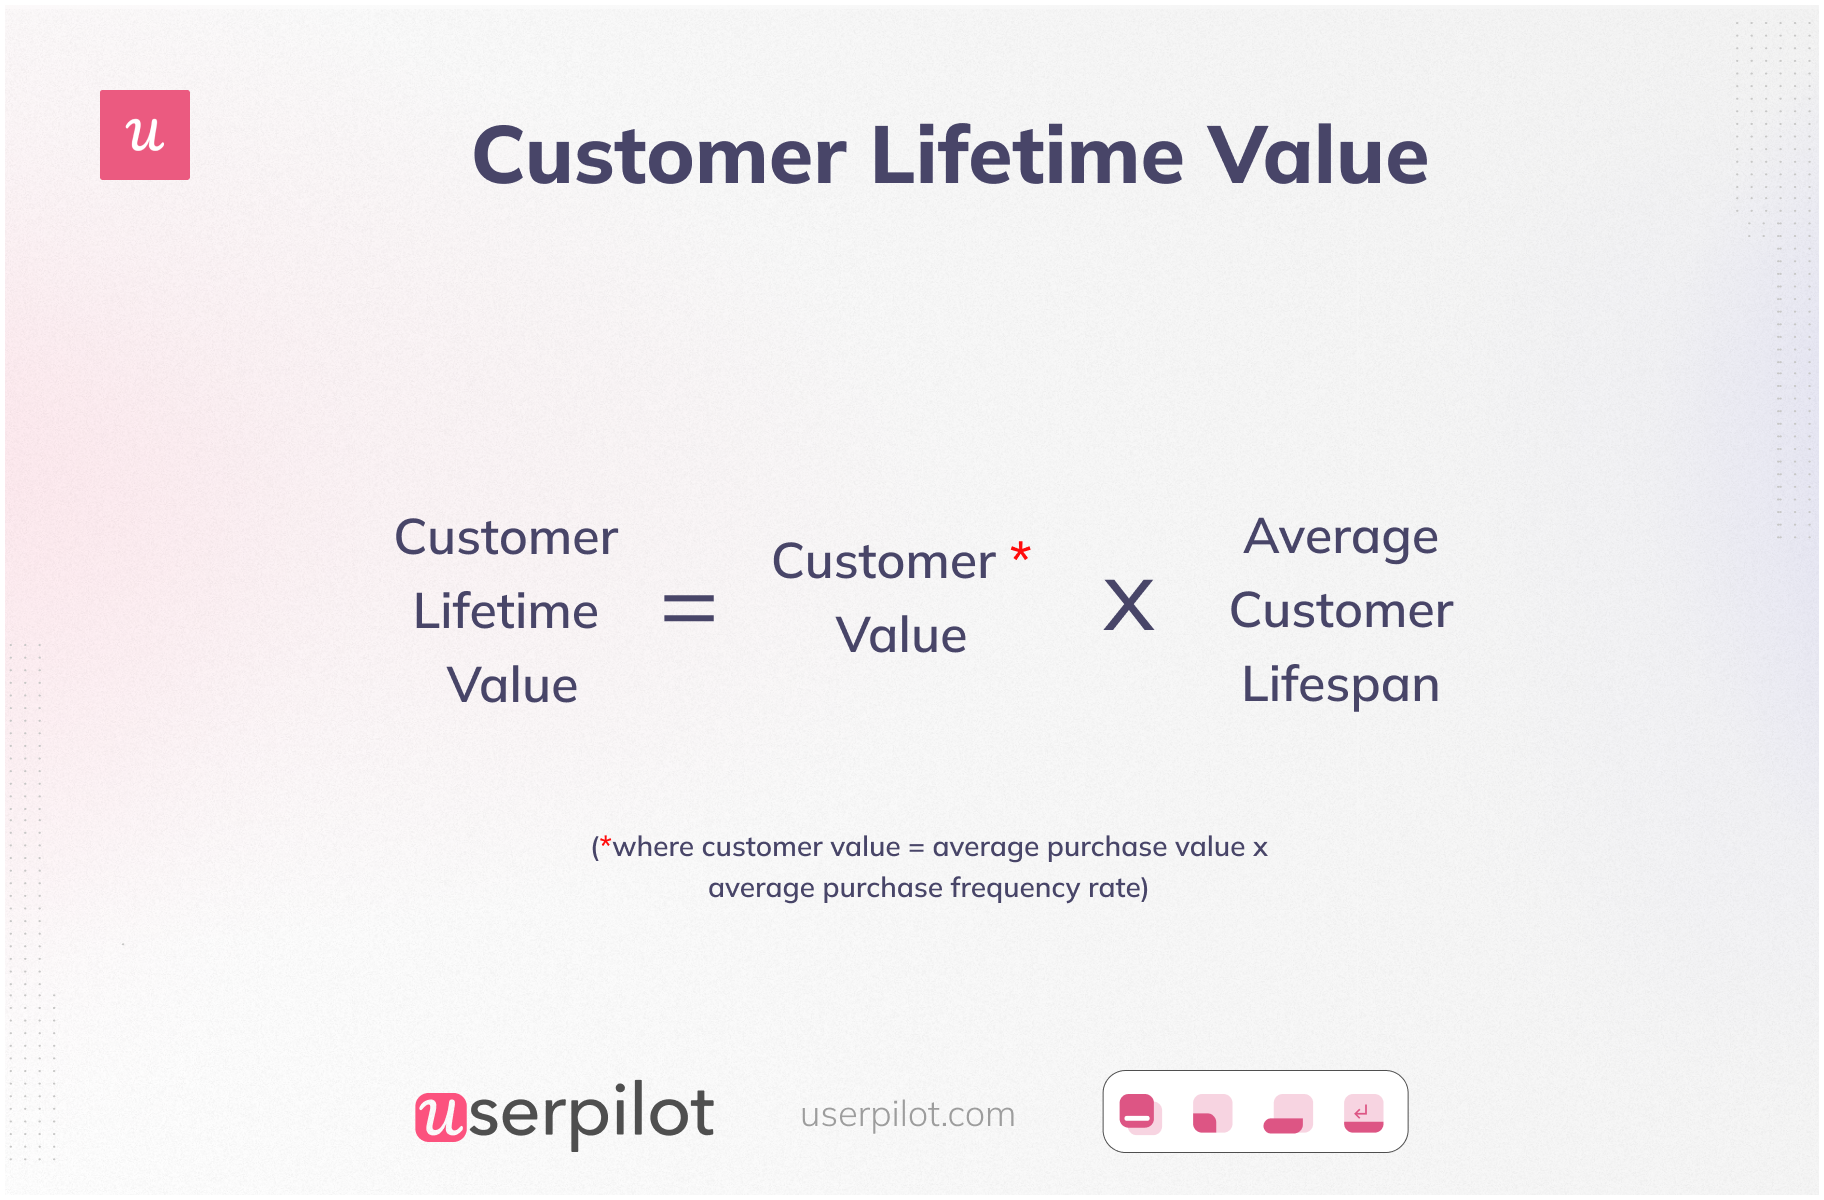 Customer Lifetime Value (CLV) calculation